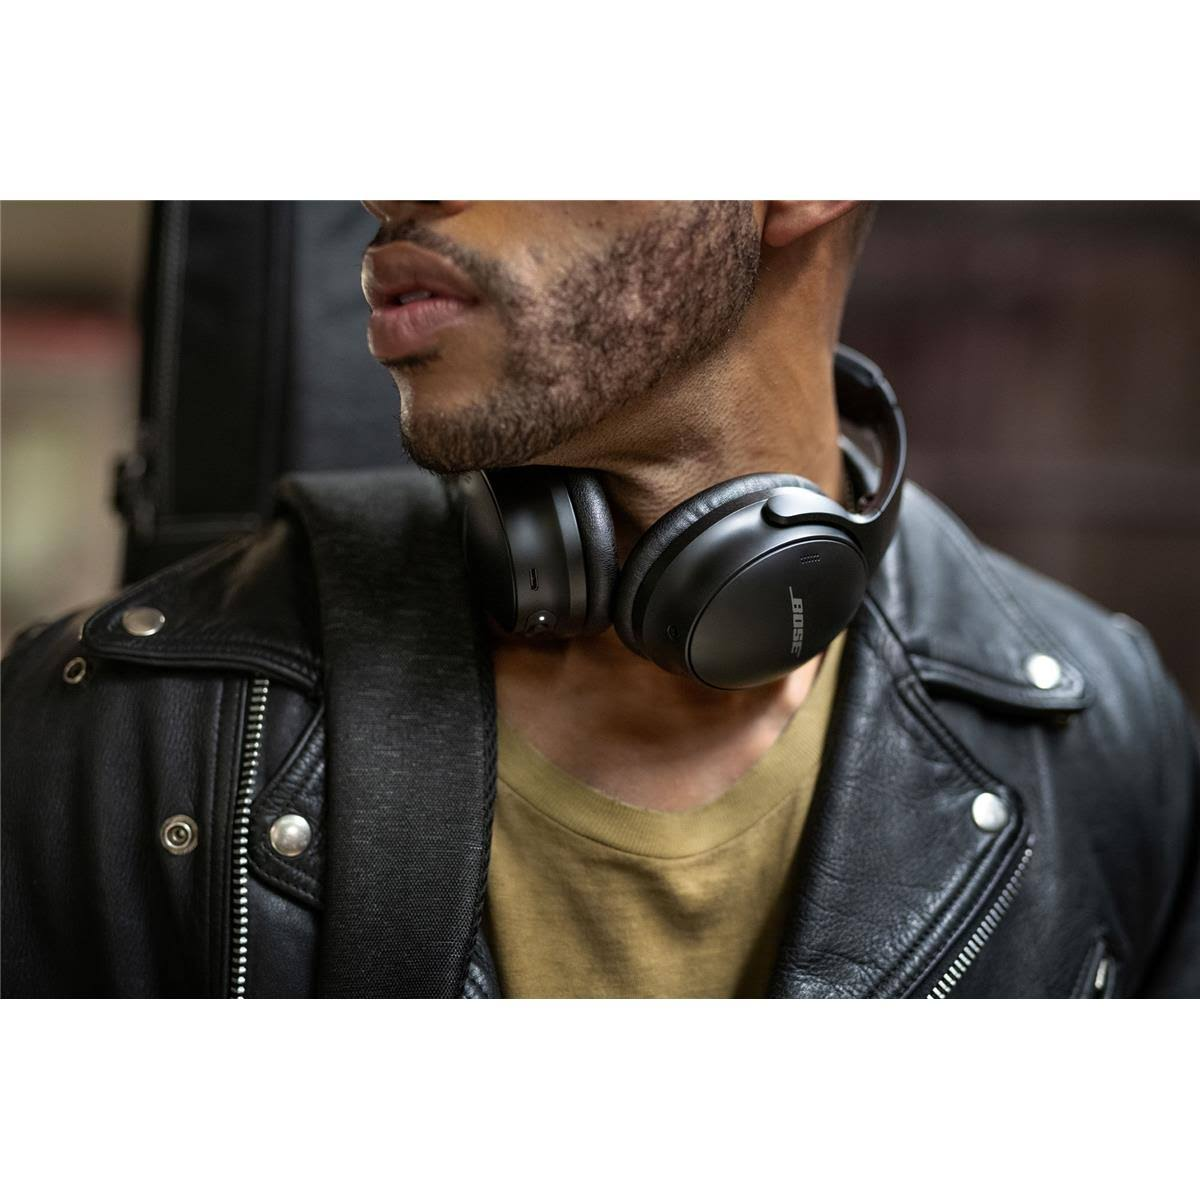 Bose QuietComfort 45 Noise-Canceling Wireless Headphones Black